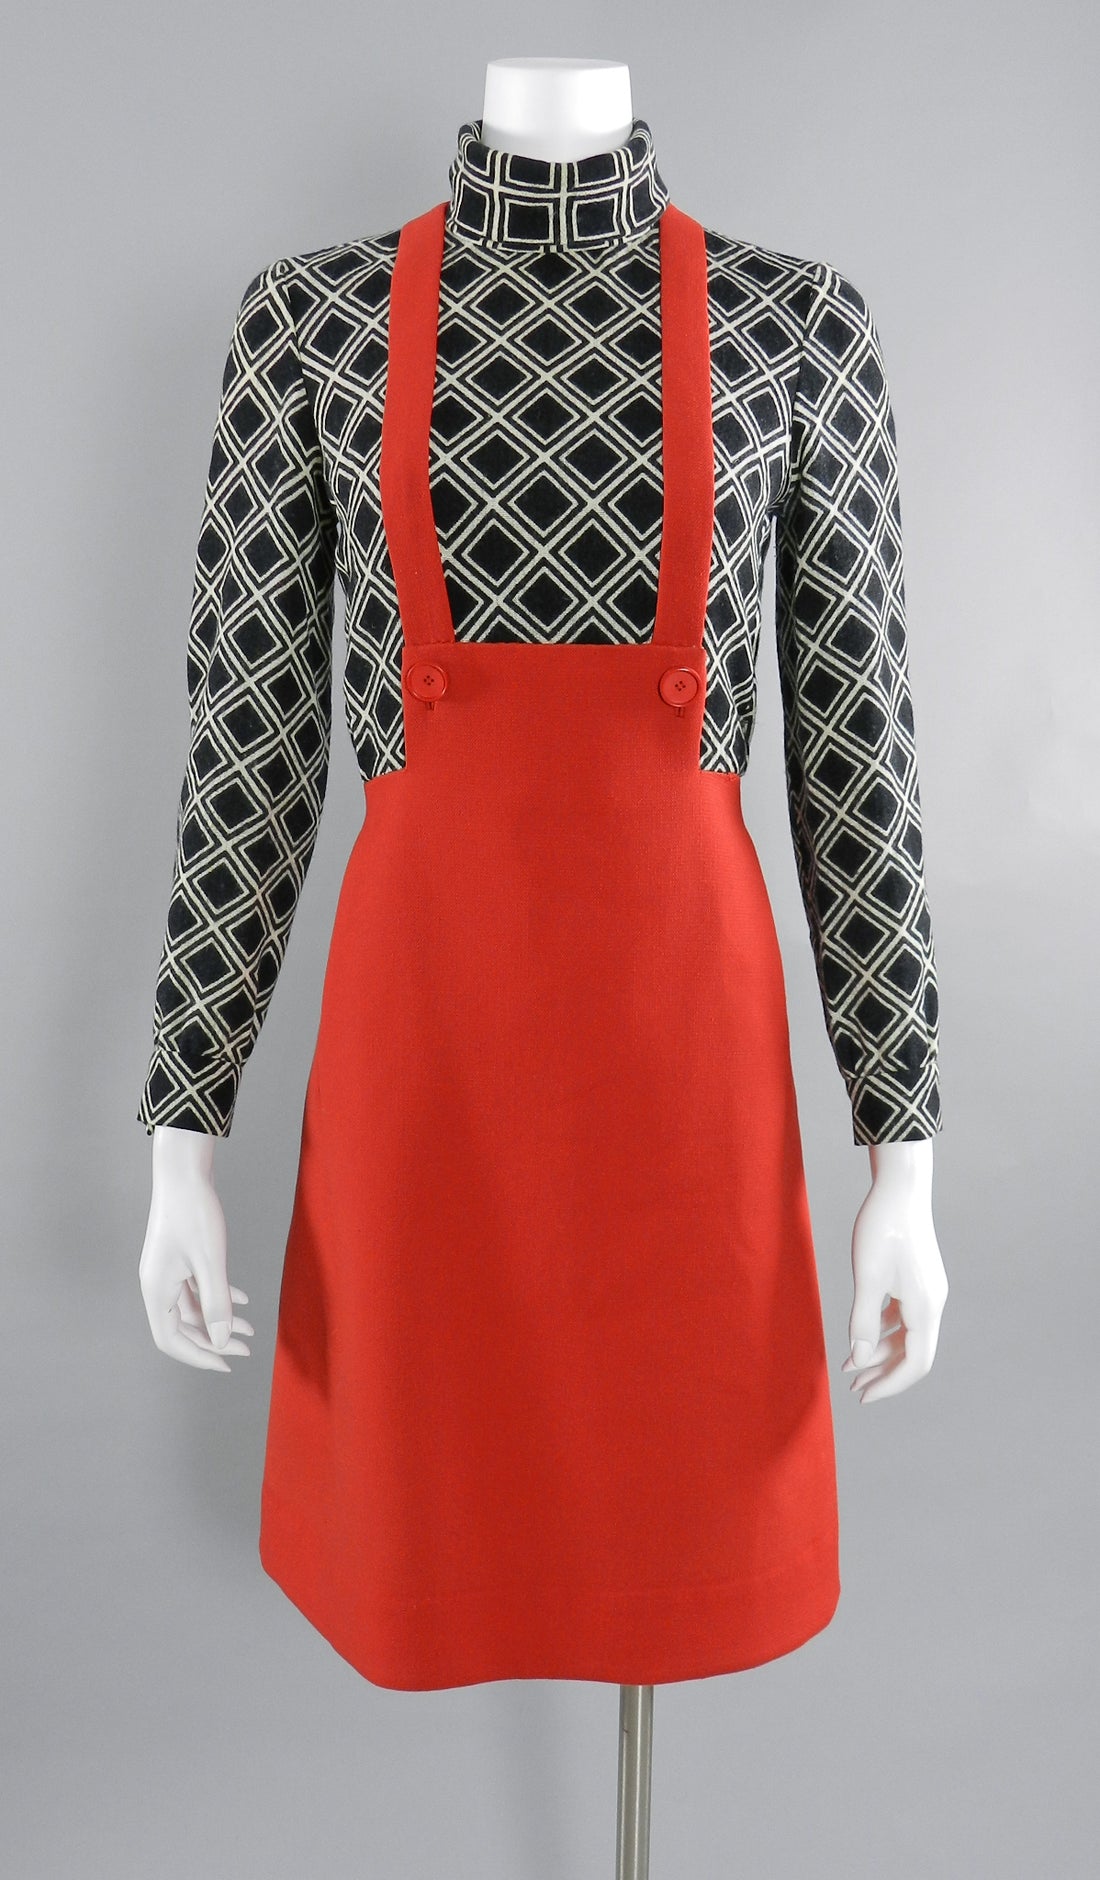 Vintage 1960's Antonio Castillo Graphic Mod Red and Black Dress